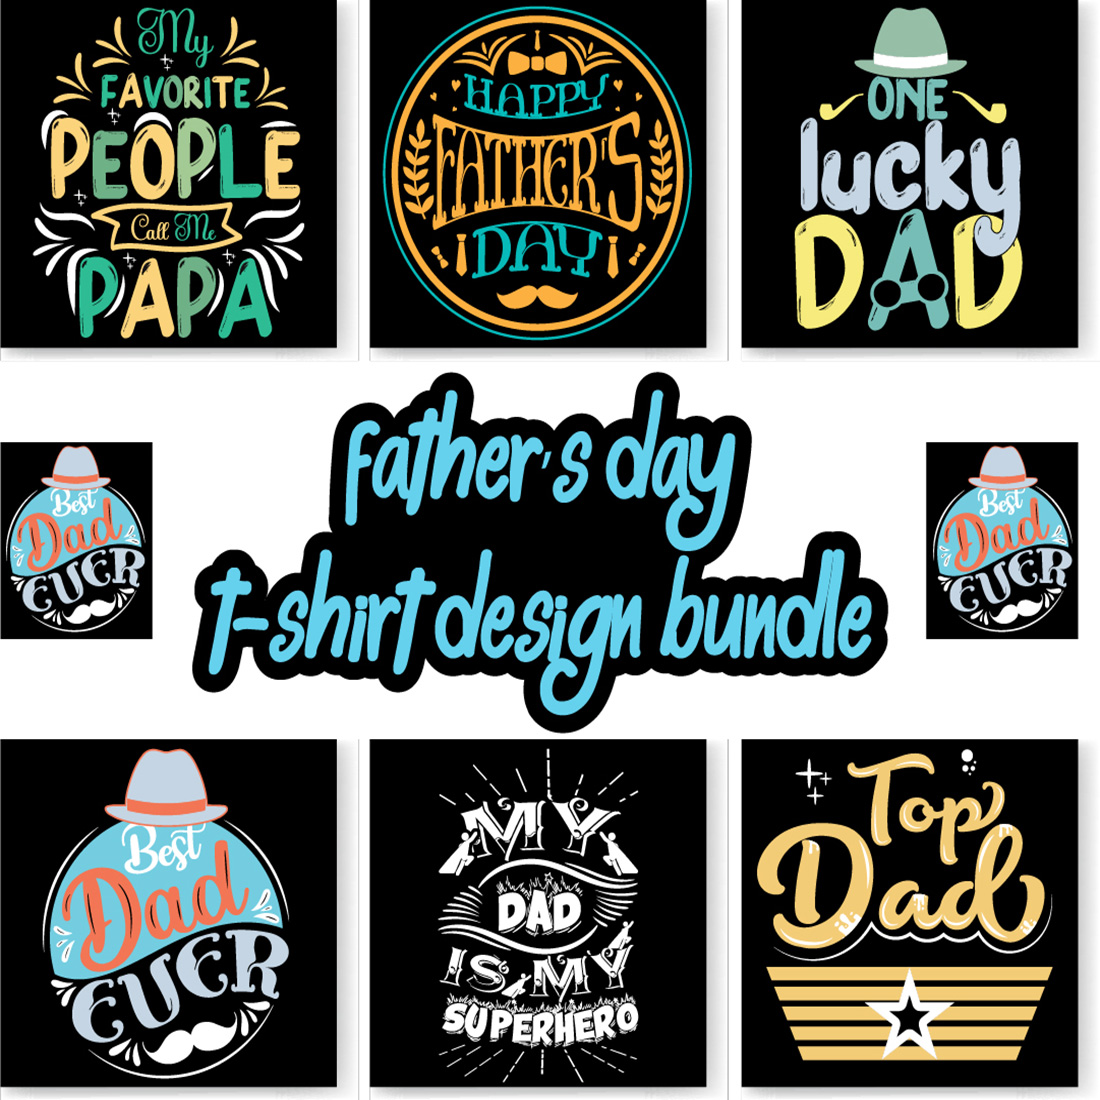 Father’s day t-shirt design bundle, Dad t-shirt design, papa t shirt preview image.